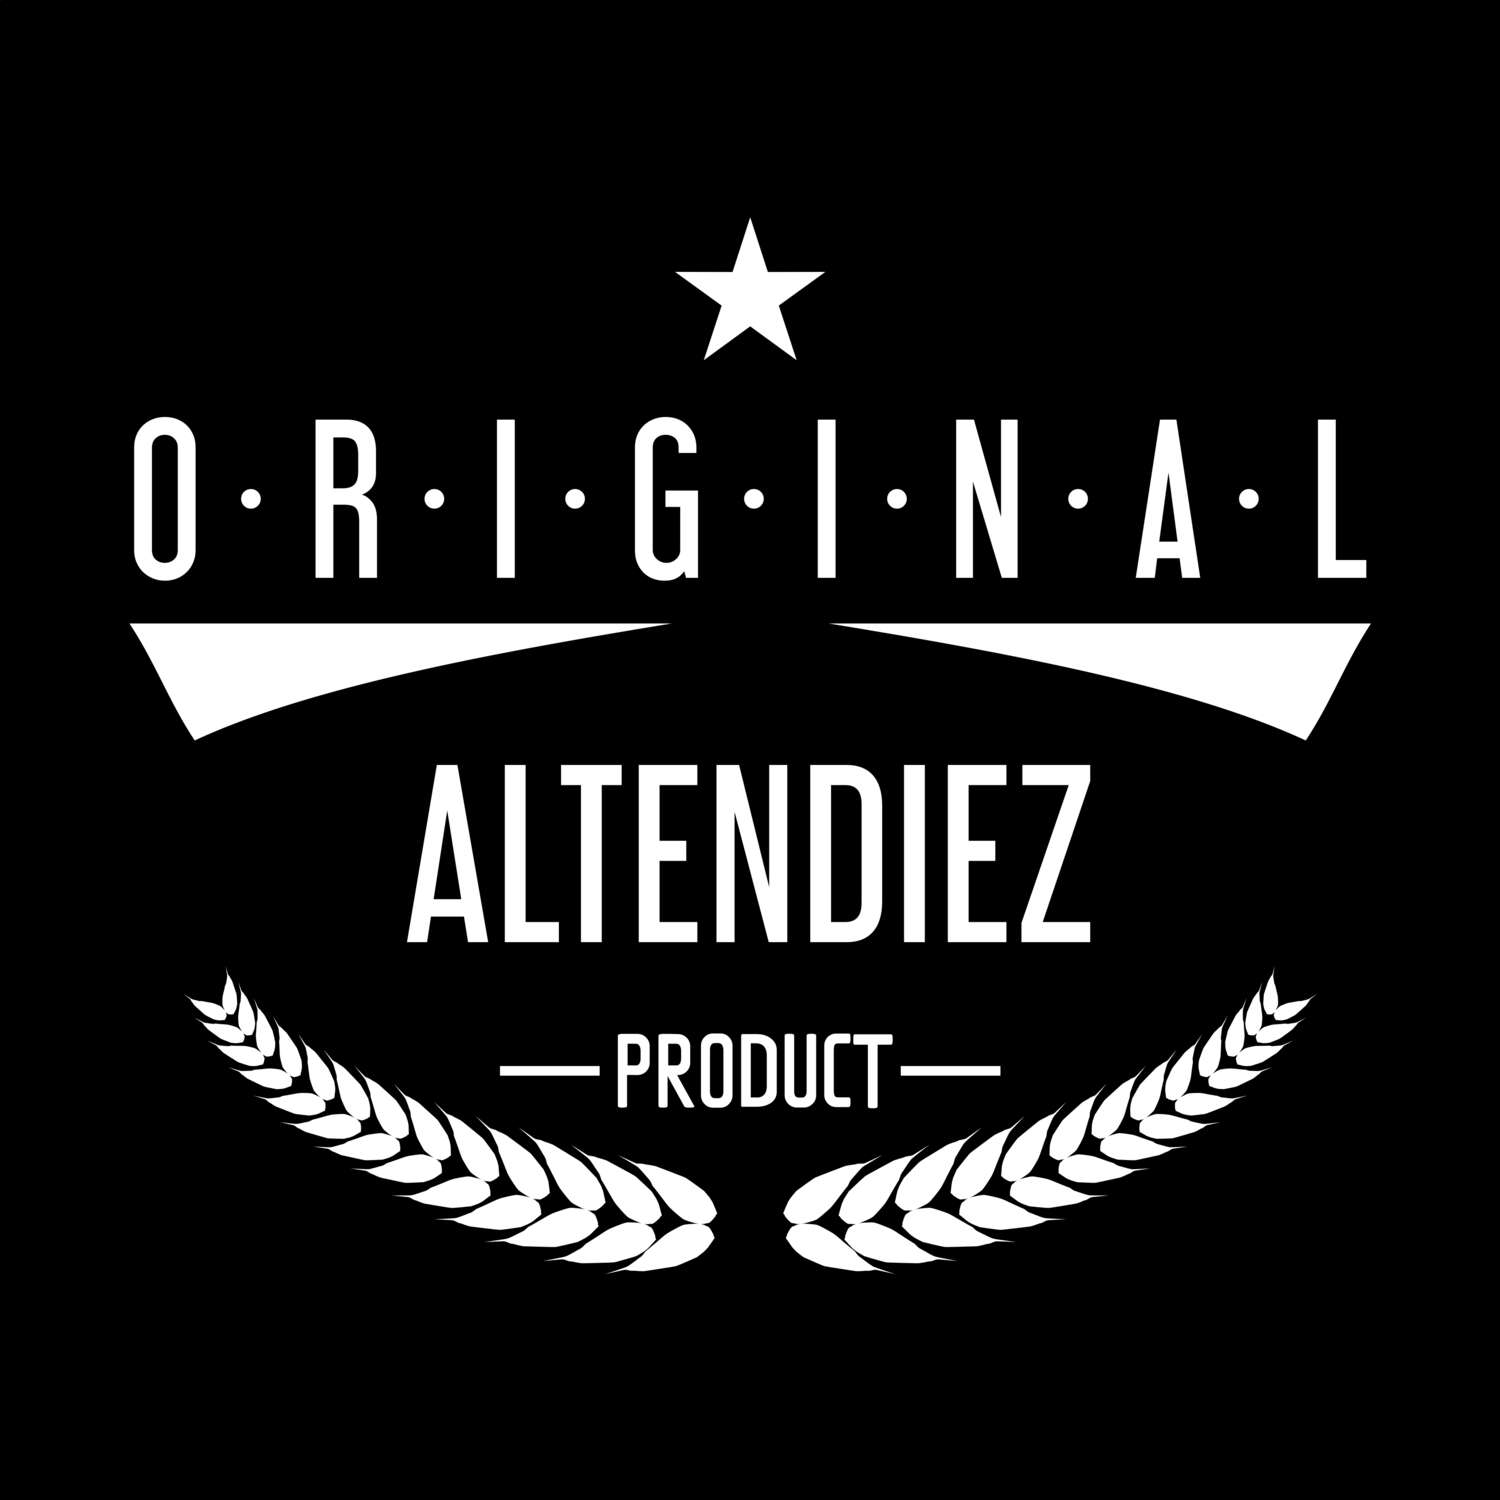 Altendiez T-Shirt »Original Product«